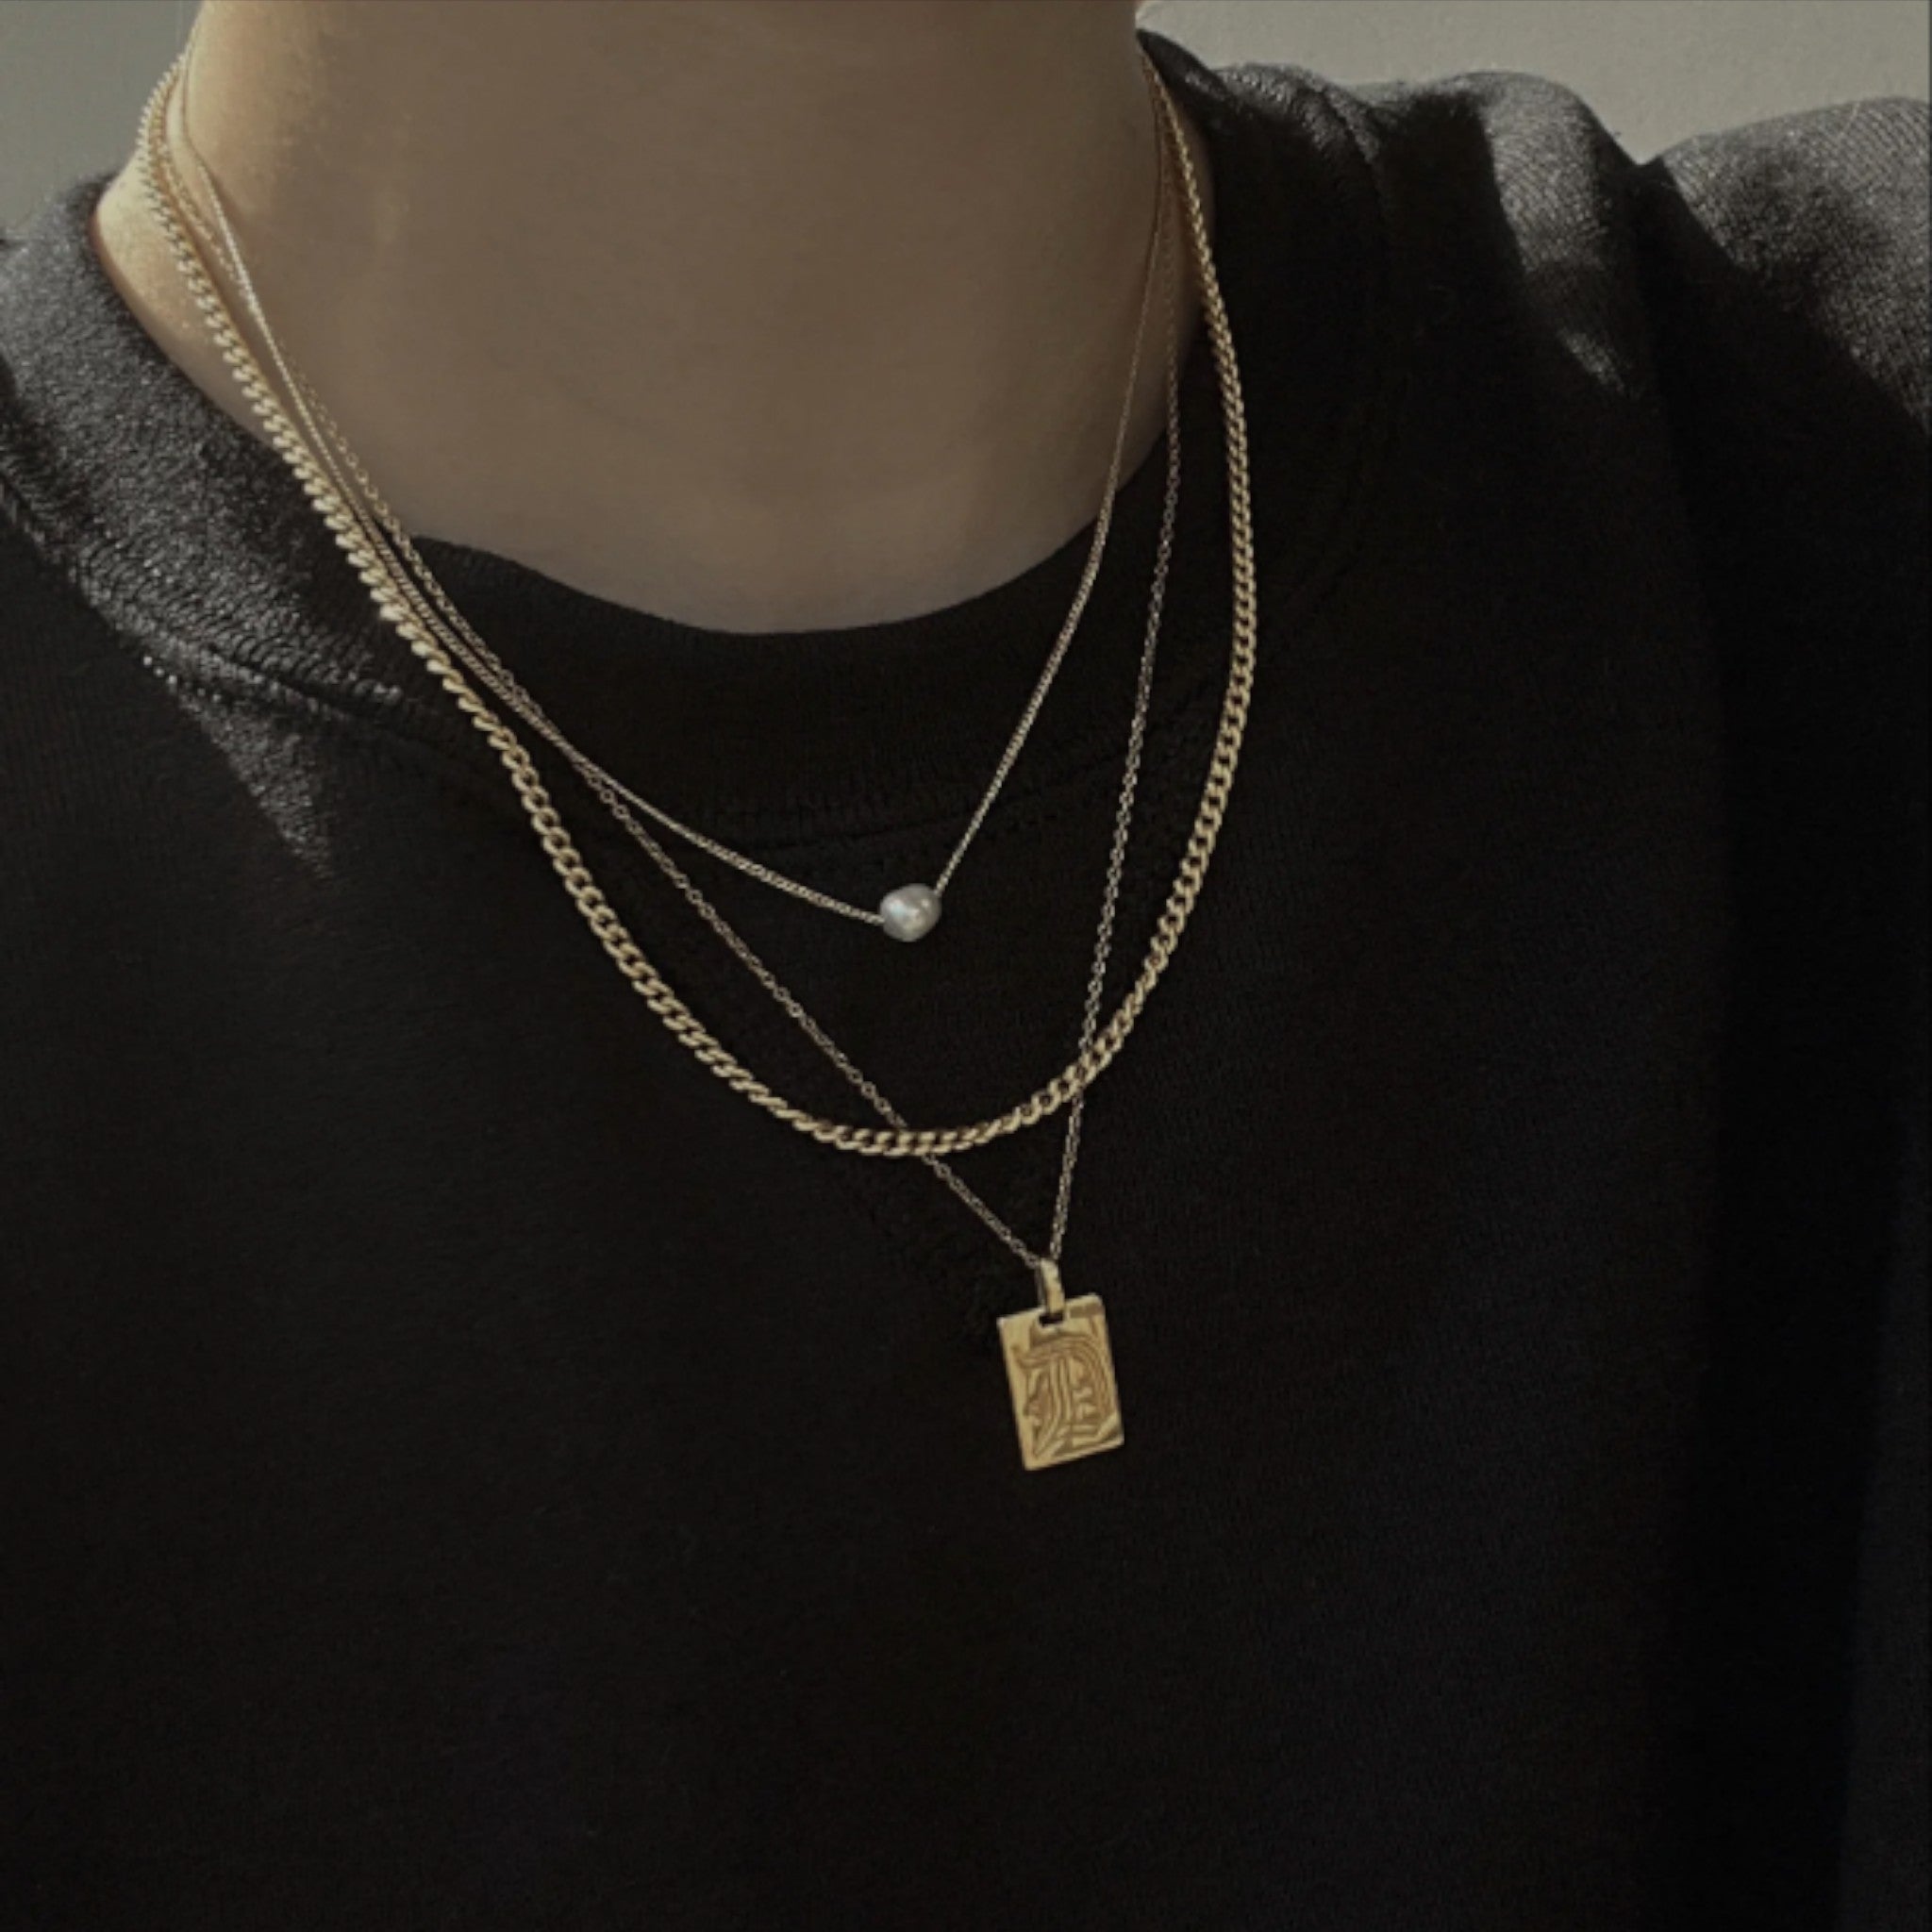 Mod + Jo - Felicity 16" Pearl Pendant Necklace - 14k Gold Fill